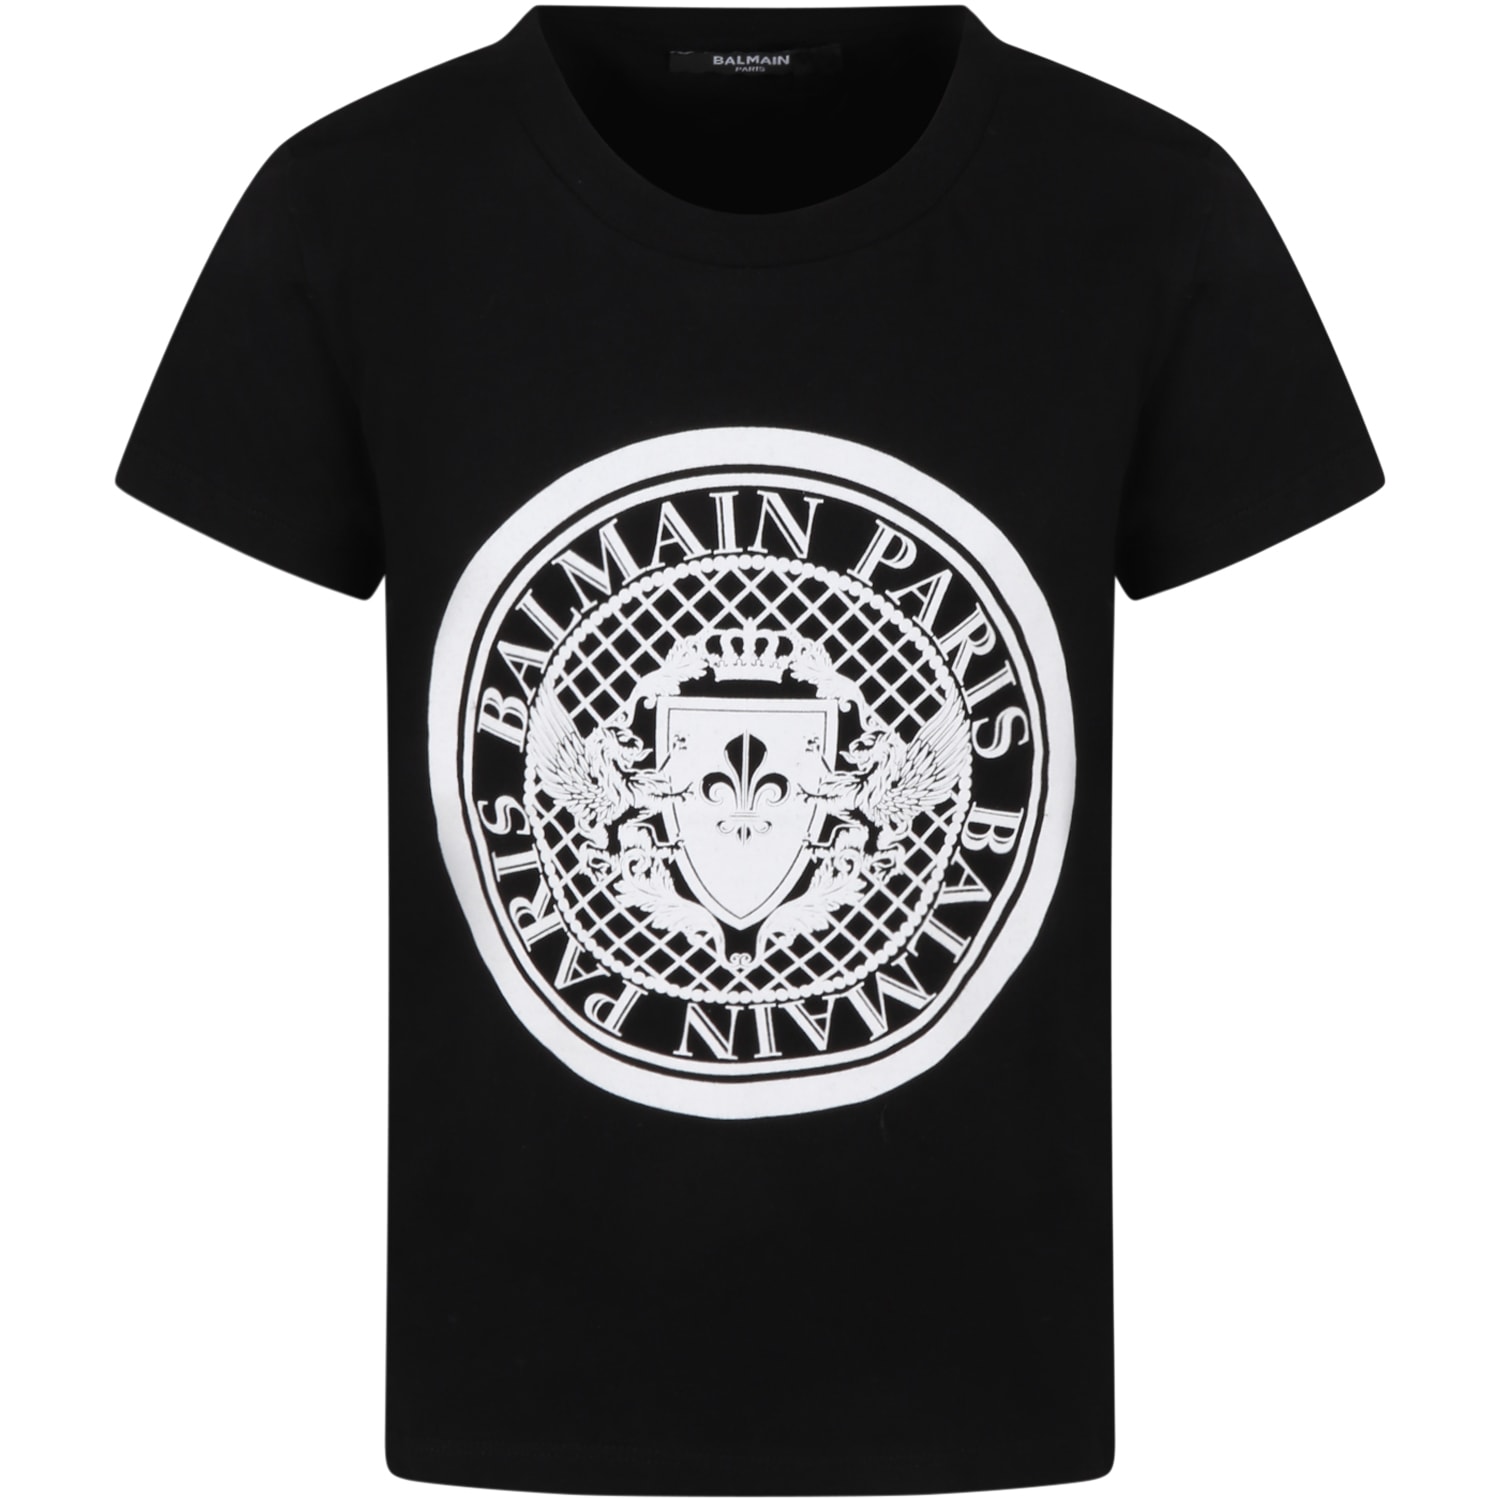 Balmain Black T-shirt For Kids With Iconic Print